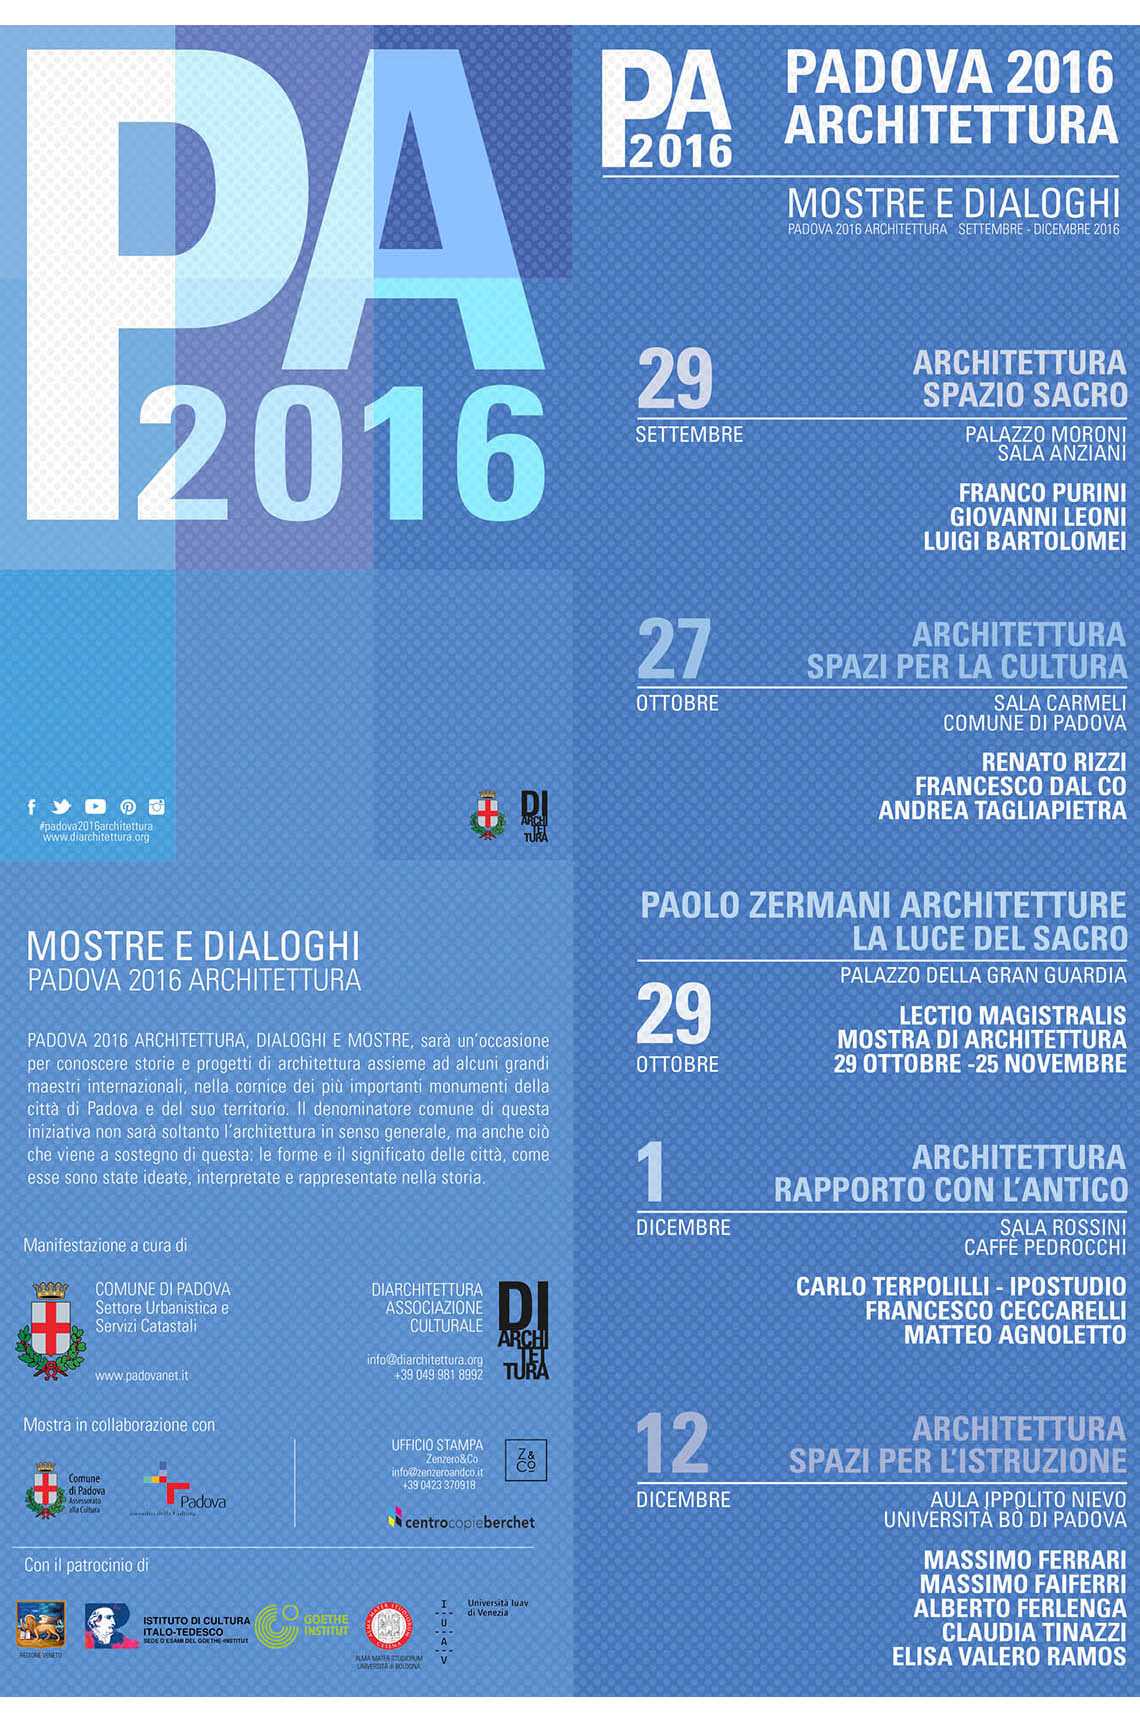 Padova 2016 Architettura - Programma